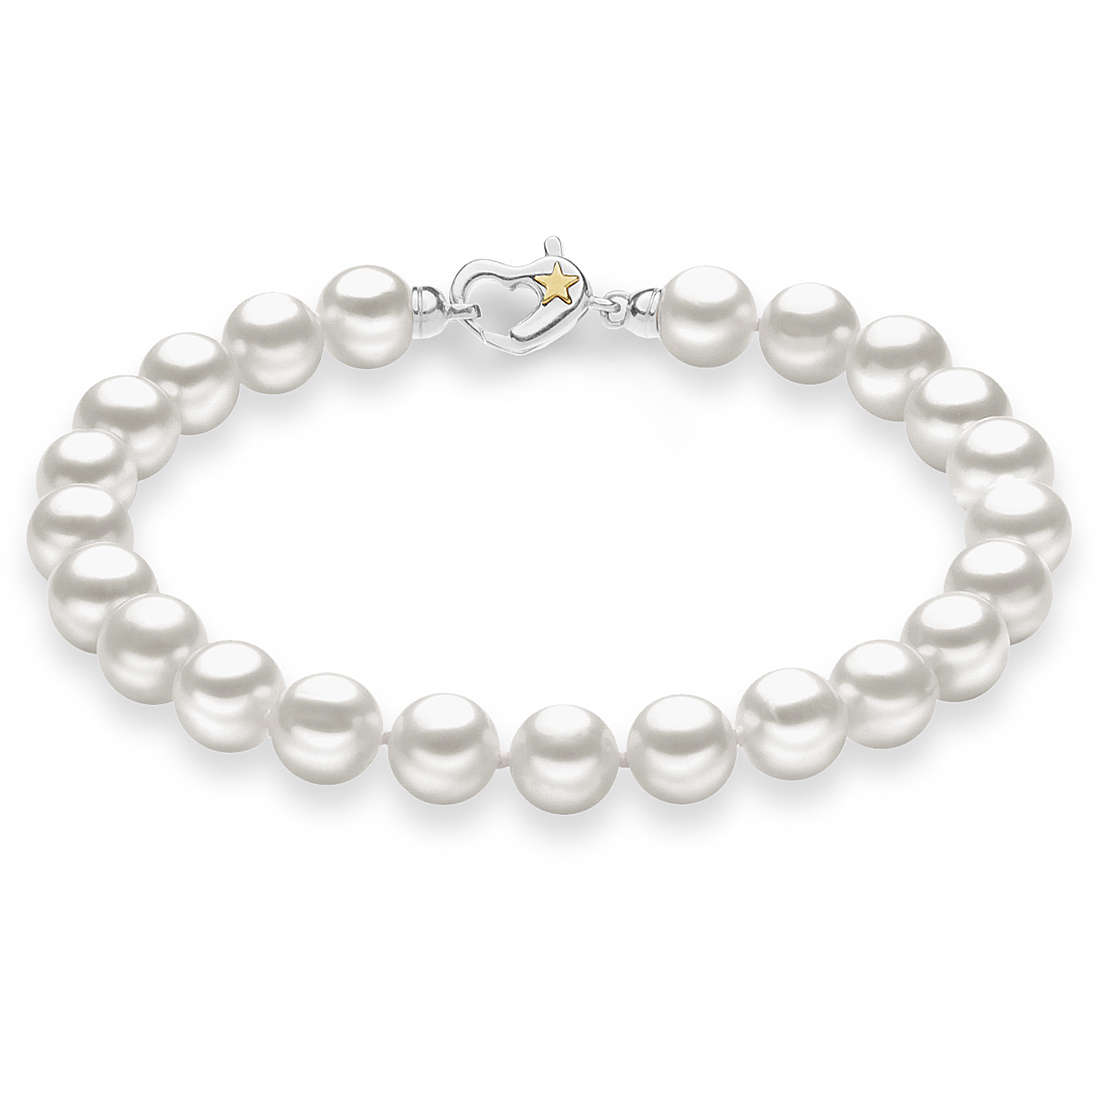 bracelet woman jewellery Comete Perle Argento BRQ 310